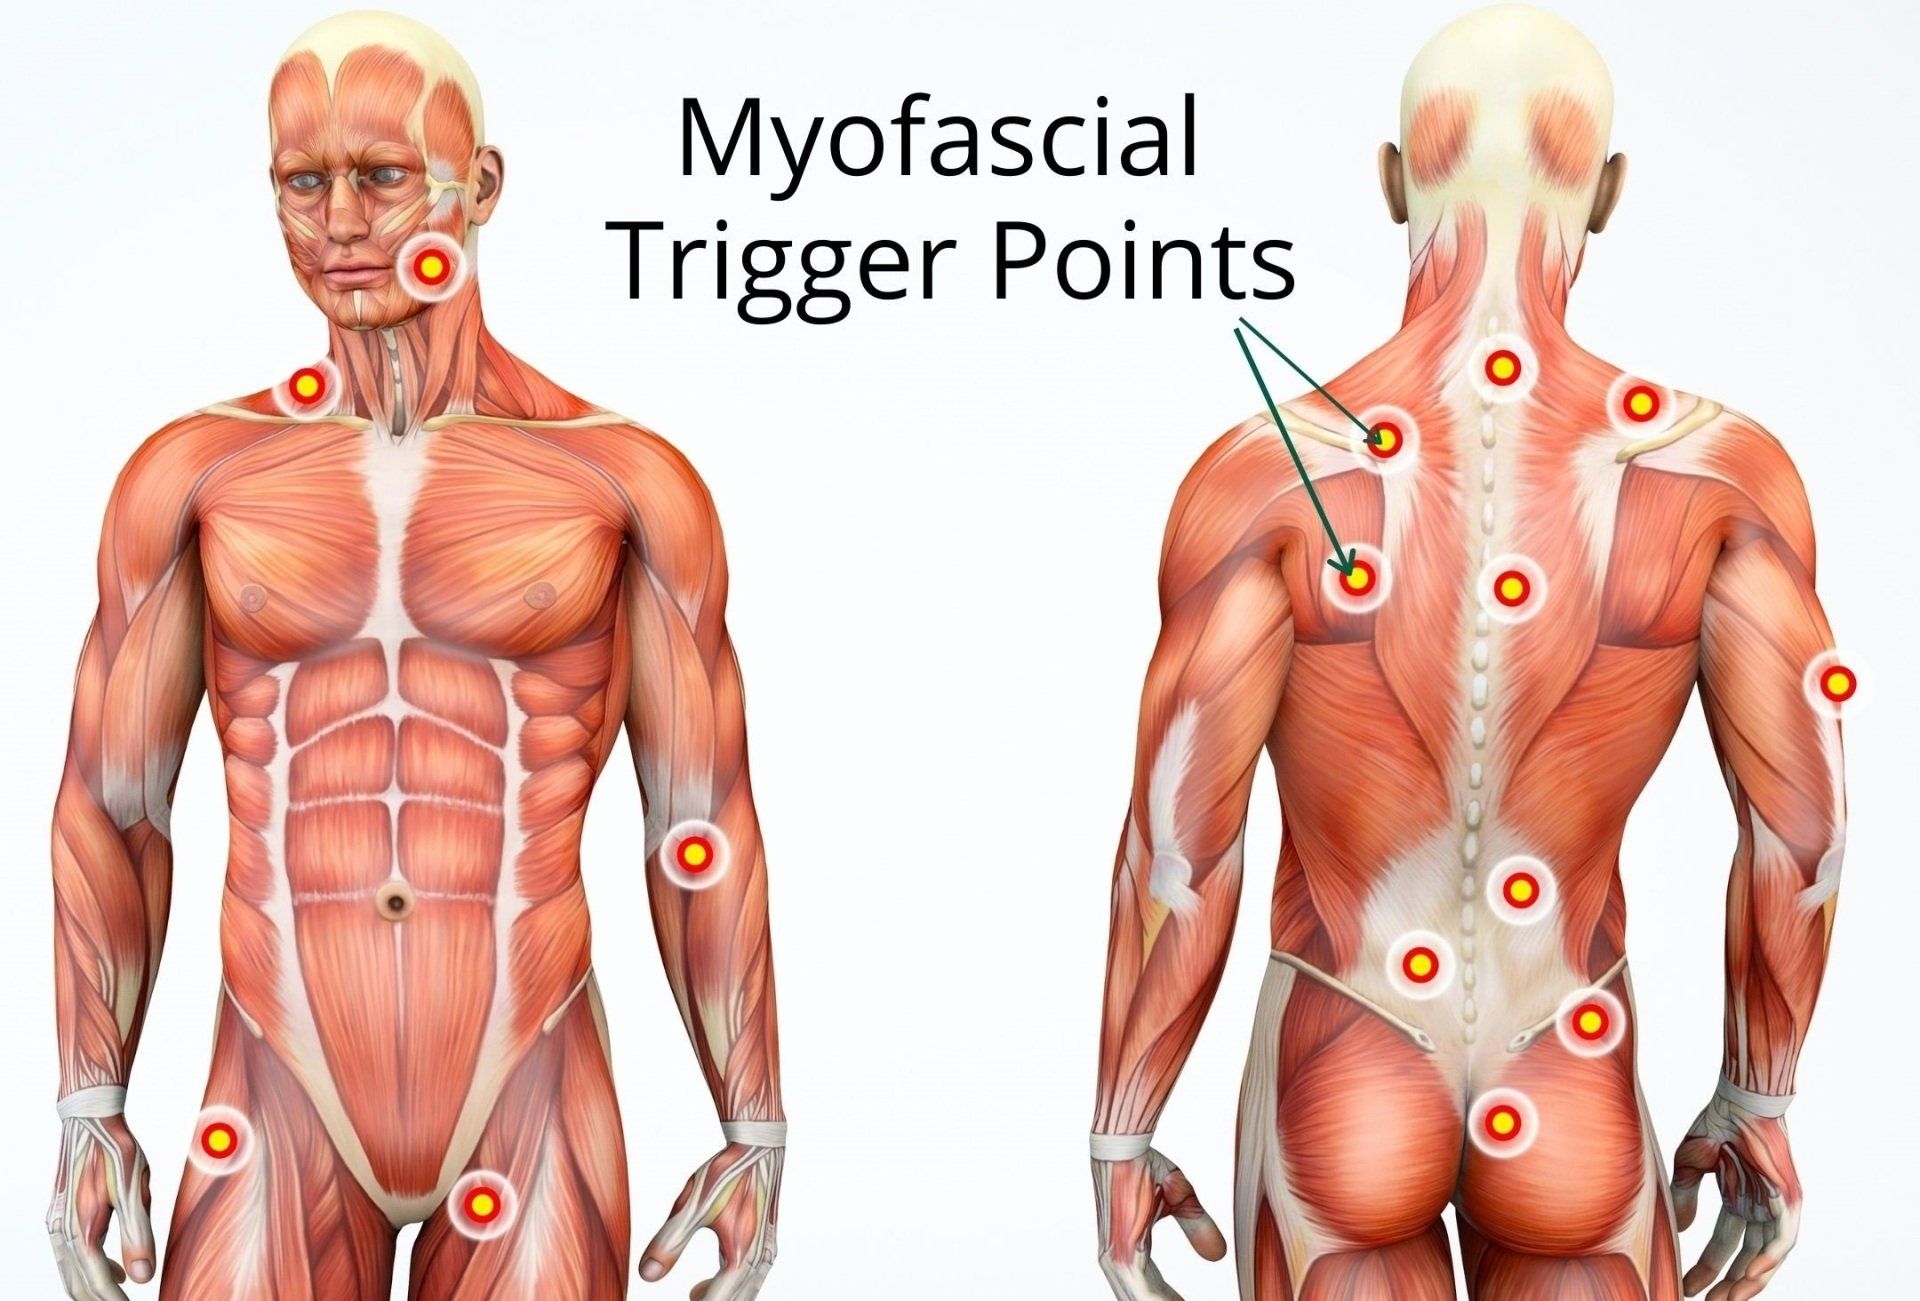 Myofascial trigger points